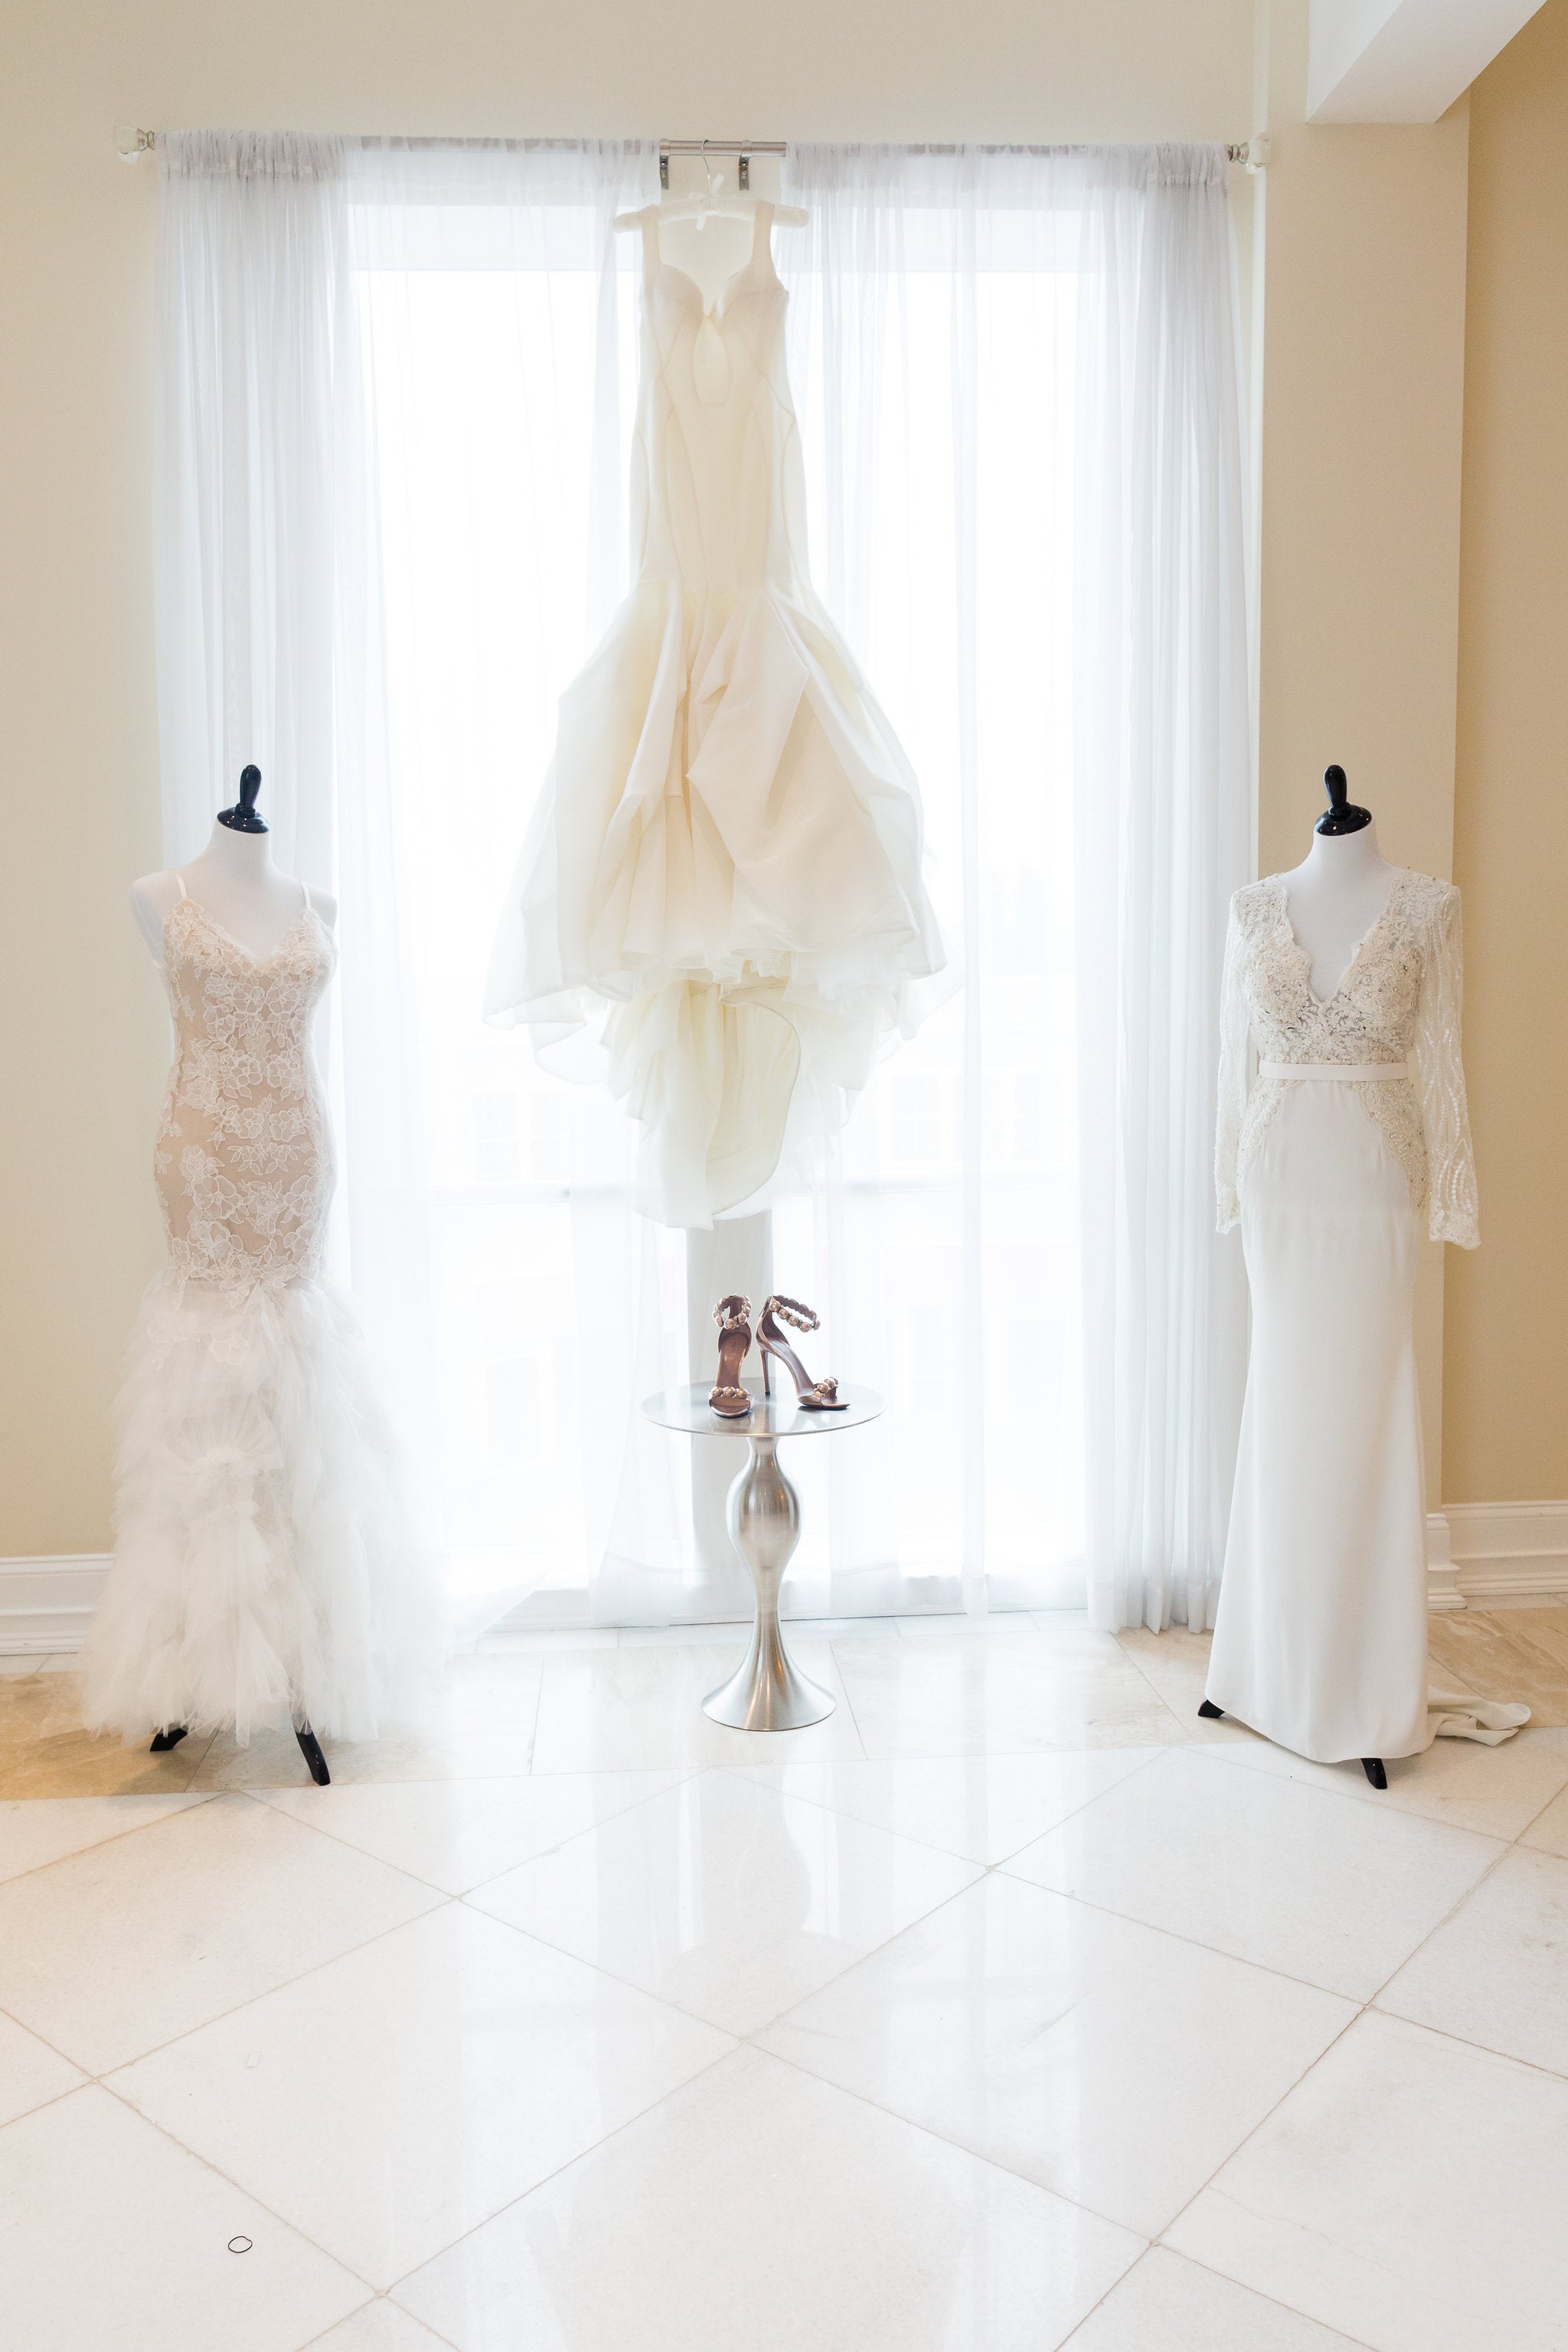 Bridal Bliss: Ayo And Sade's Virginia Wedding Was Full Of Regal Glamour
